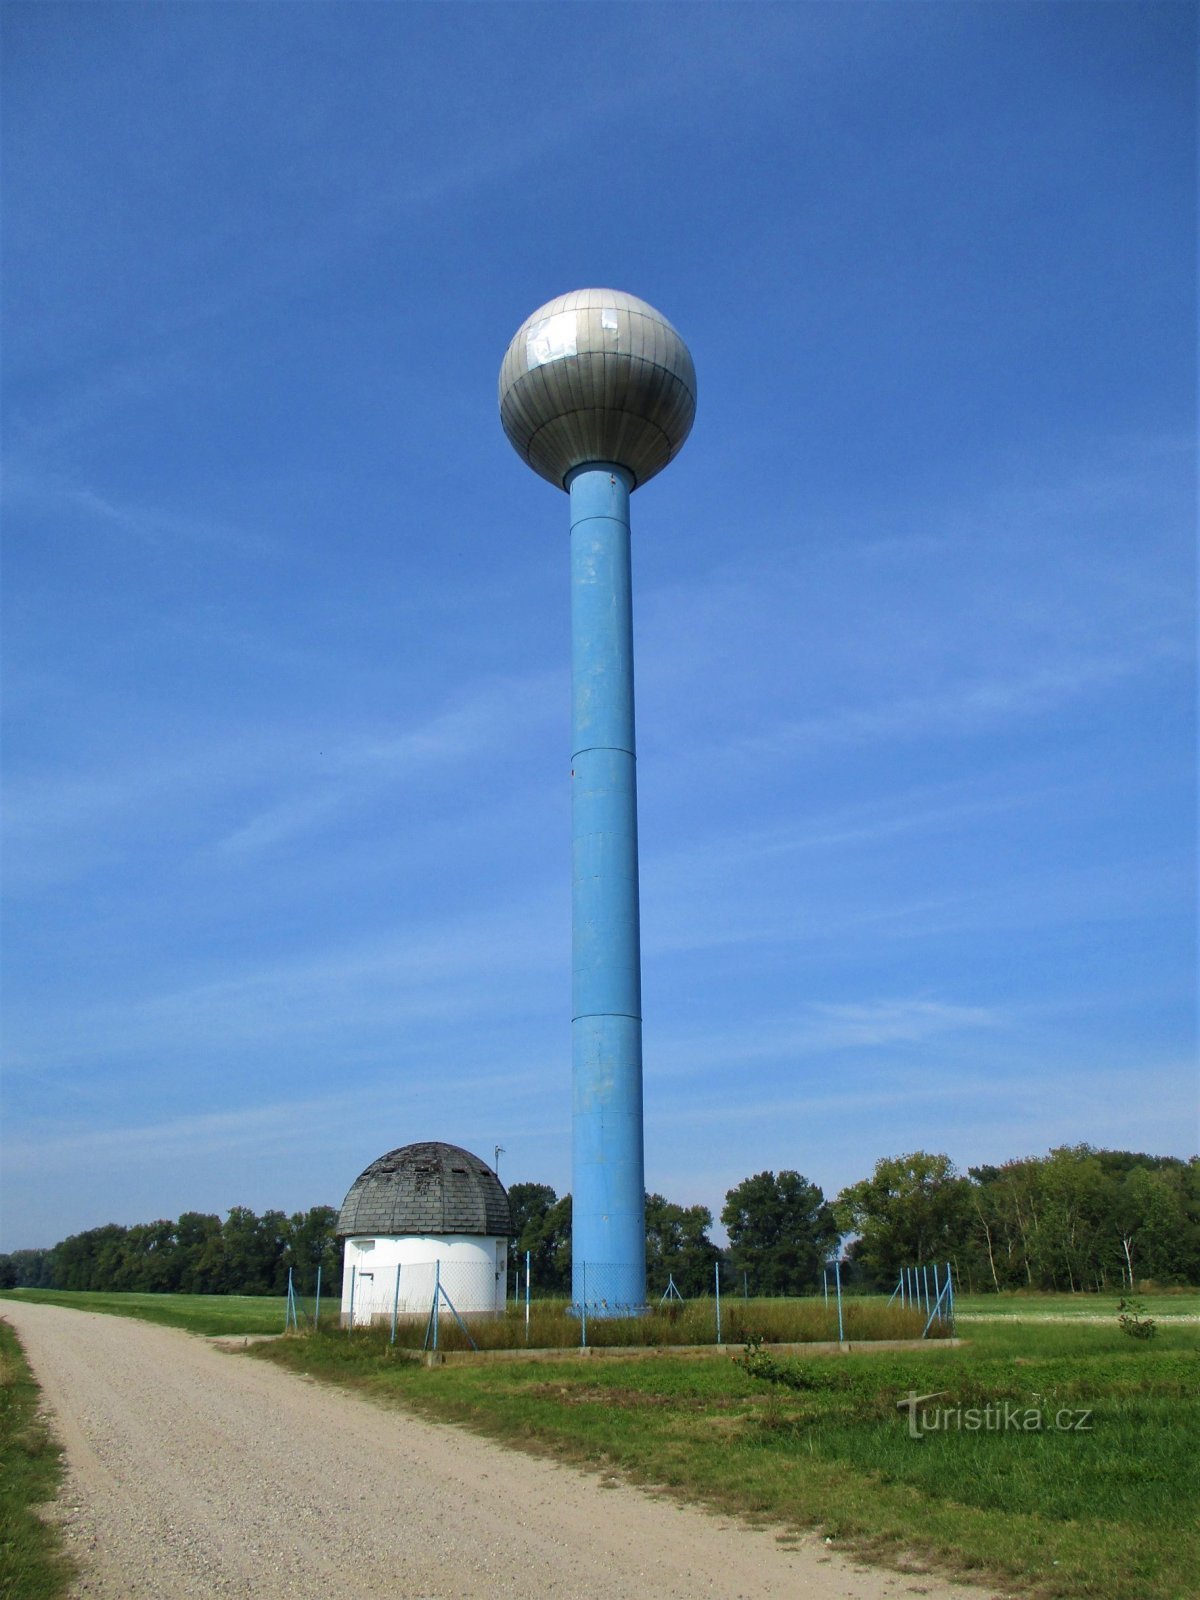 Serbatoio idrico della torre Aquaglobus (Kratonohy, 13.9.2020/XNUMX/XNUMX)